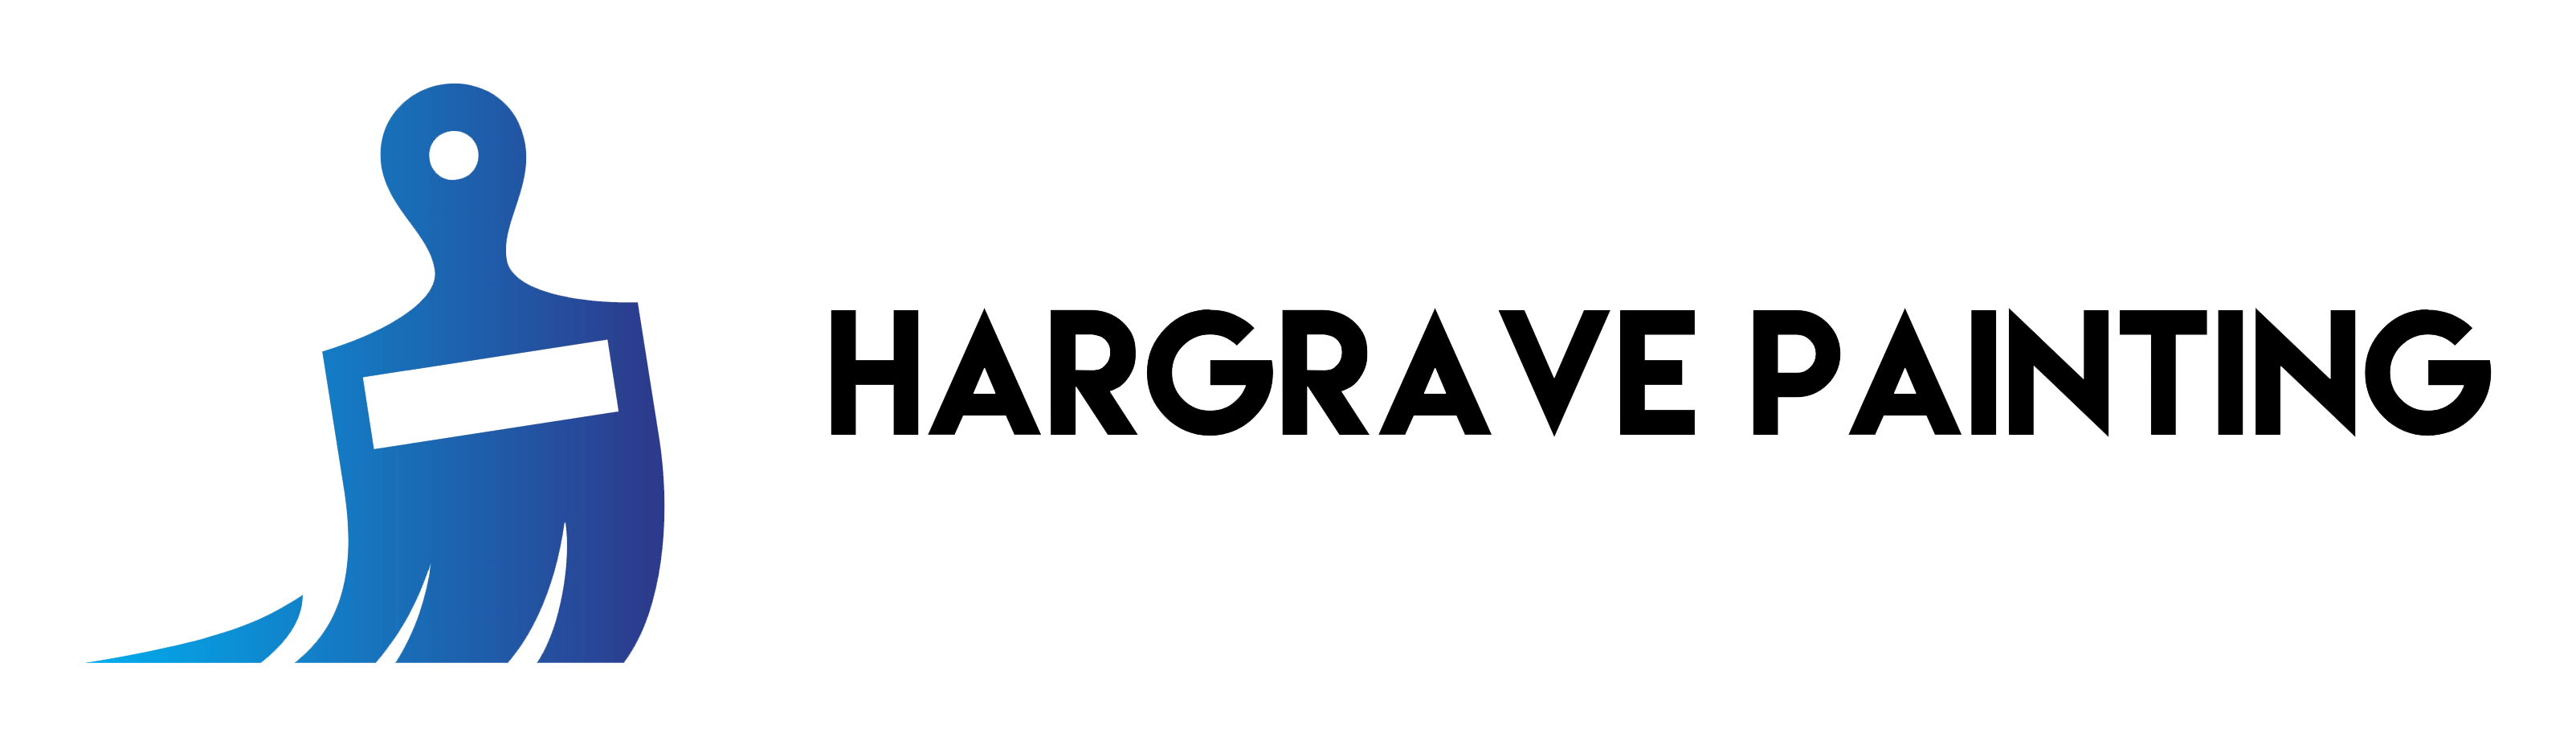 Hargrave Painting Logo